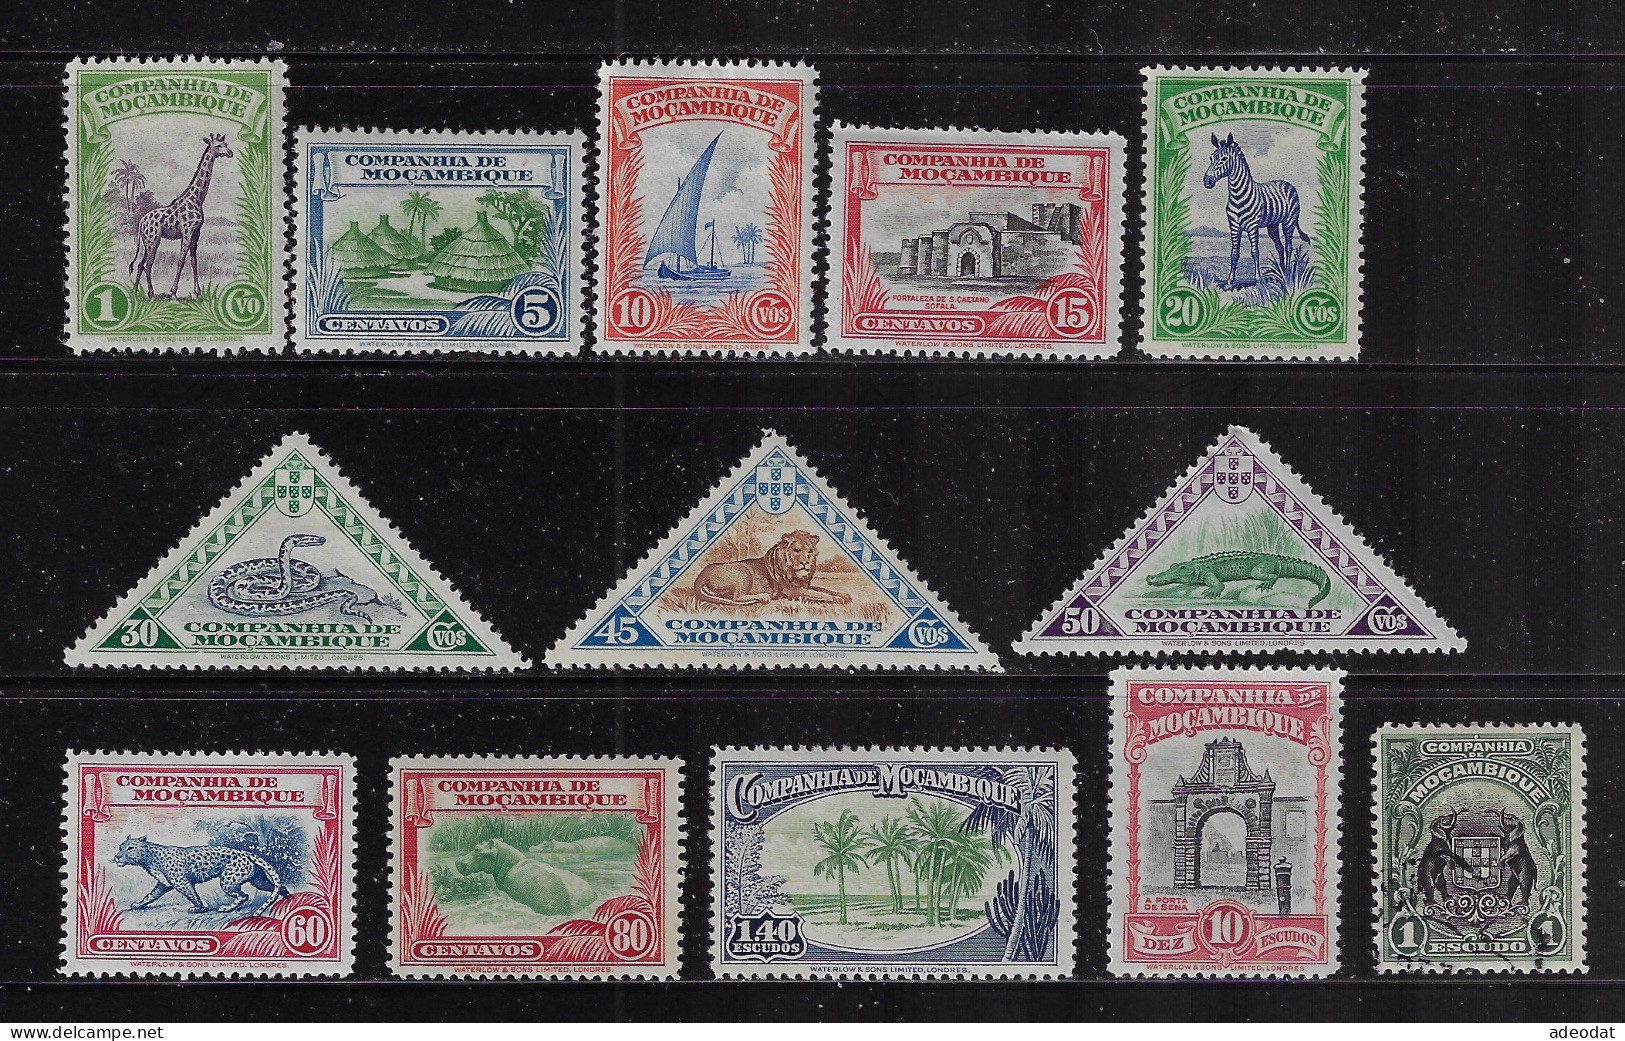 MOZAMBIQUE COMPANY 1937  SCOTT#175-180,182-184,186,188,189,192  MH CV $4.20 - Mosambik